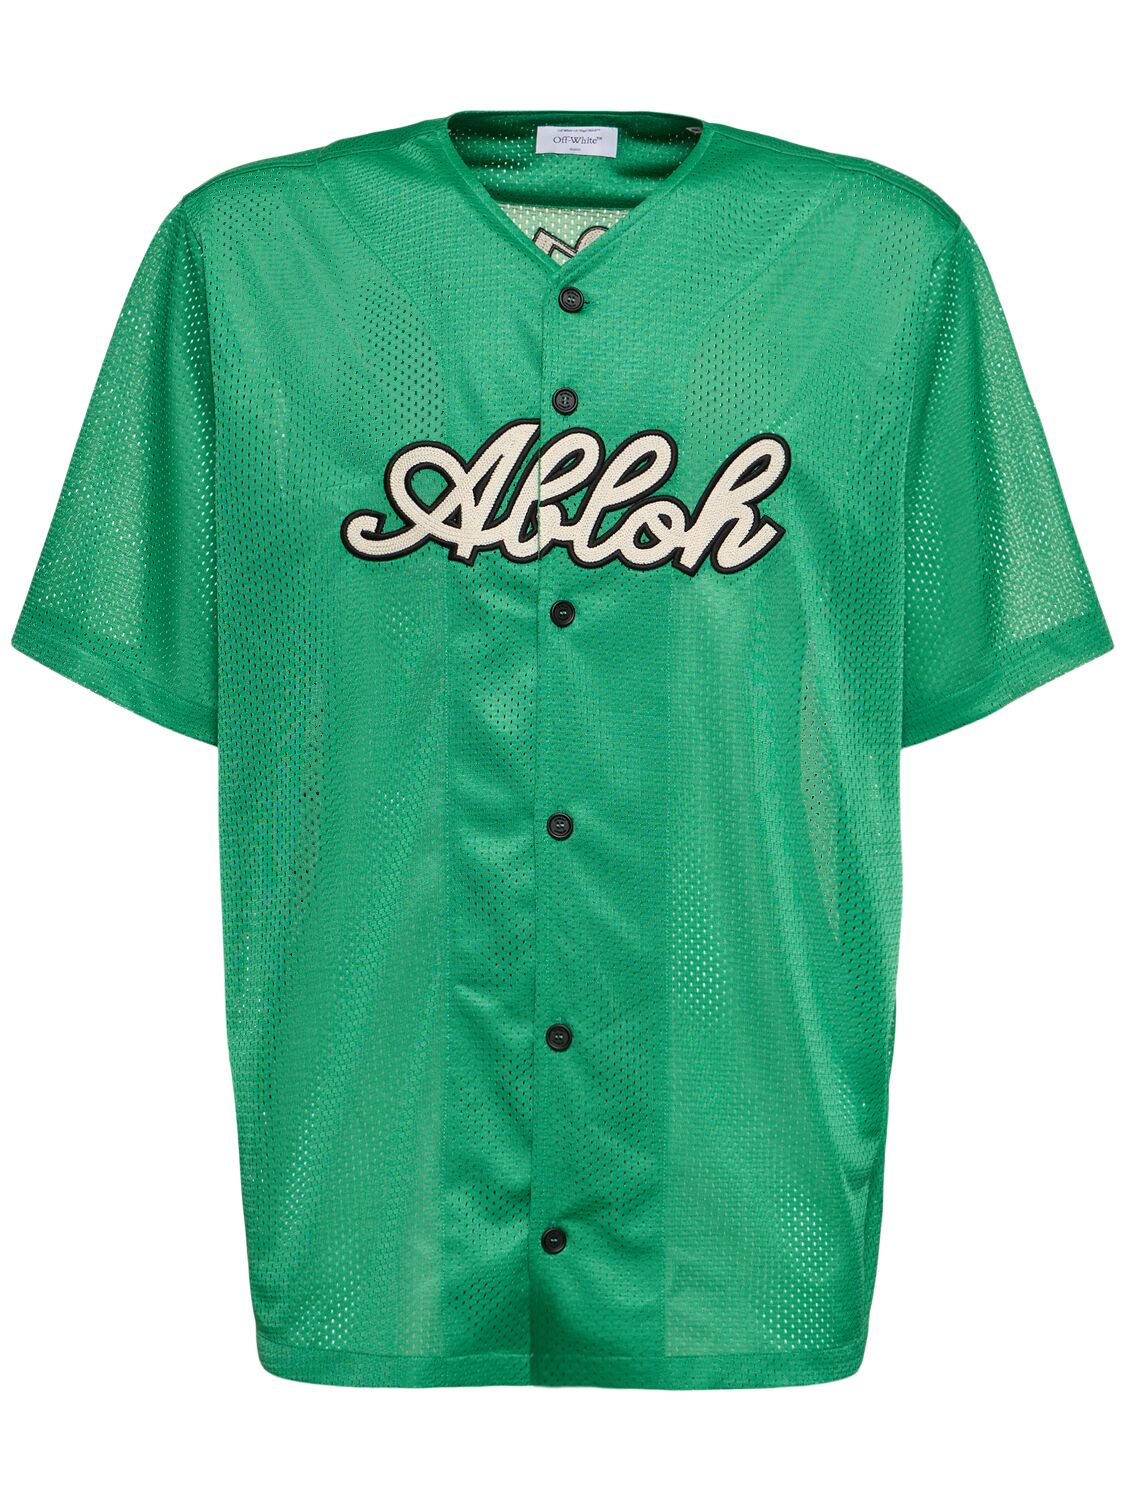 Image of Baseball Tech Mesh T-shirt